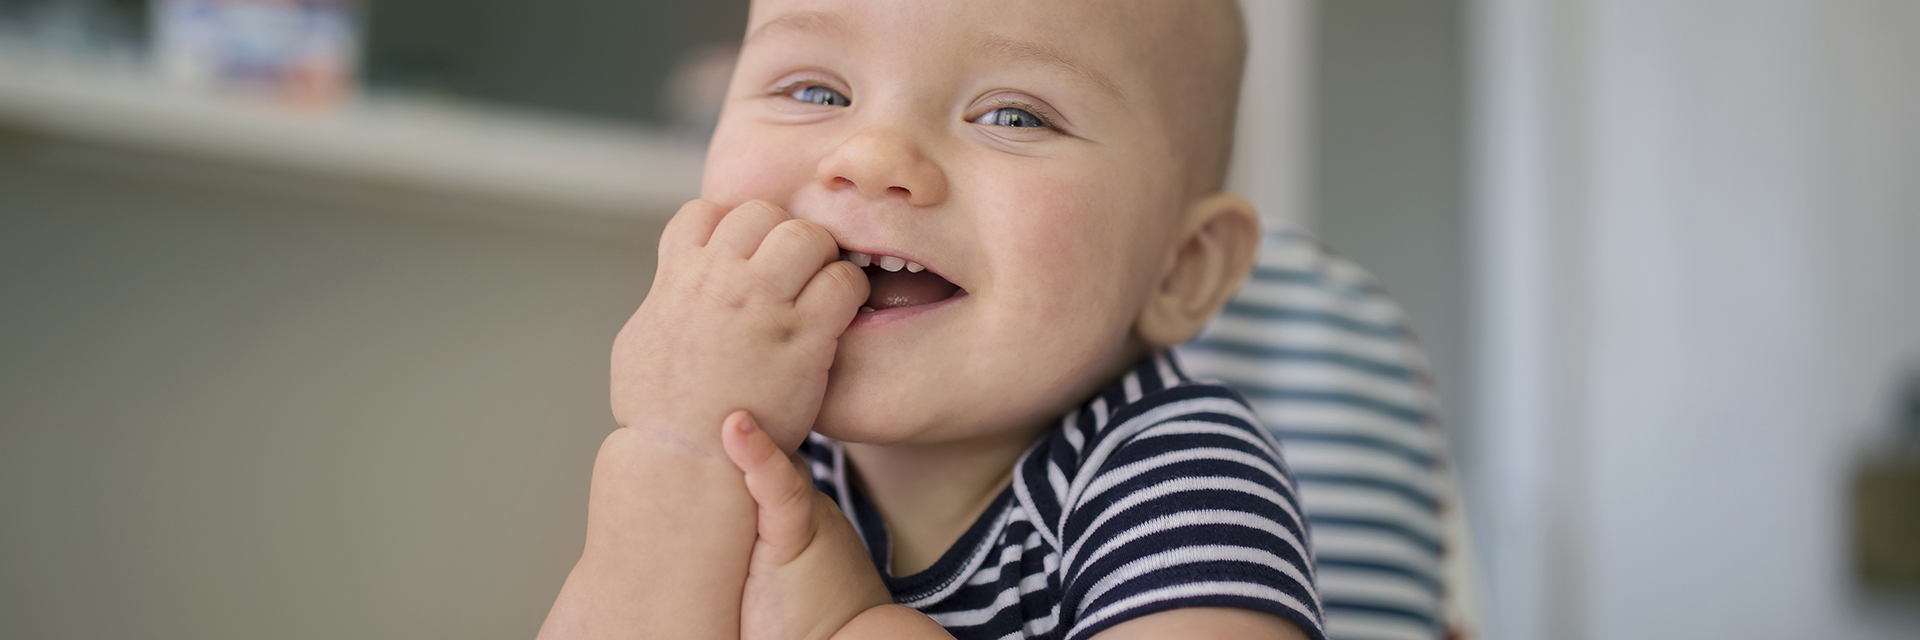 Baby boy smiling in stripe shirt